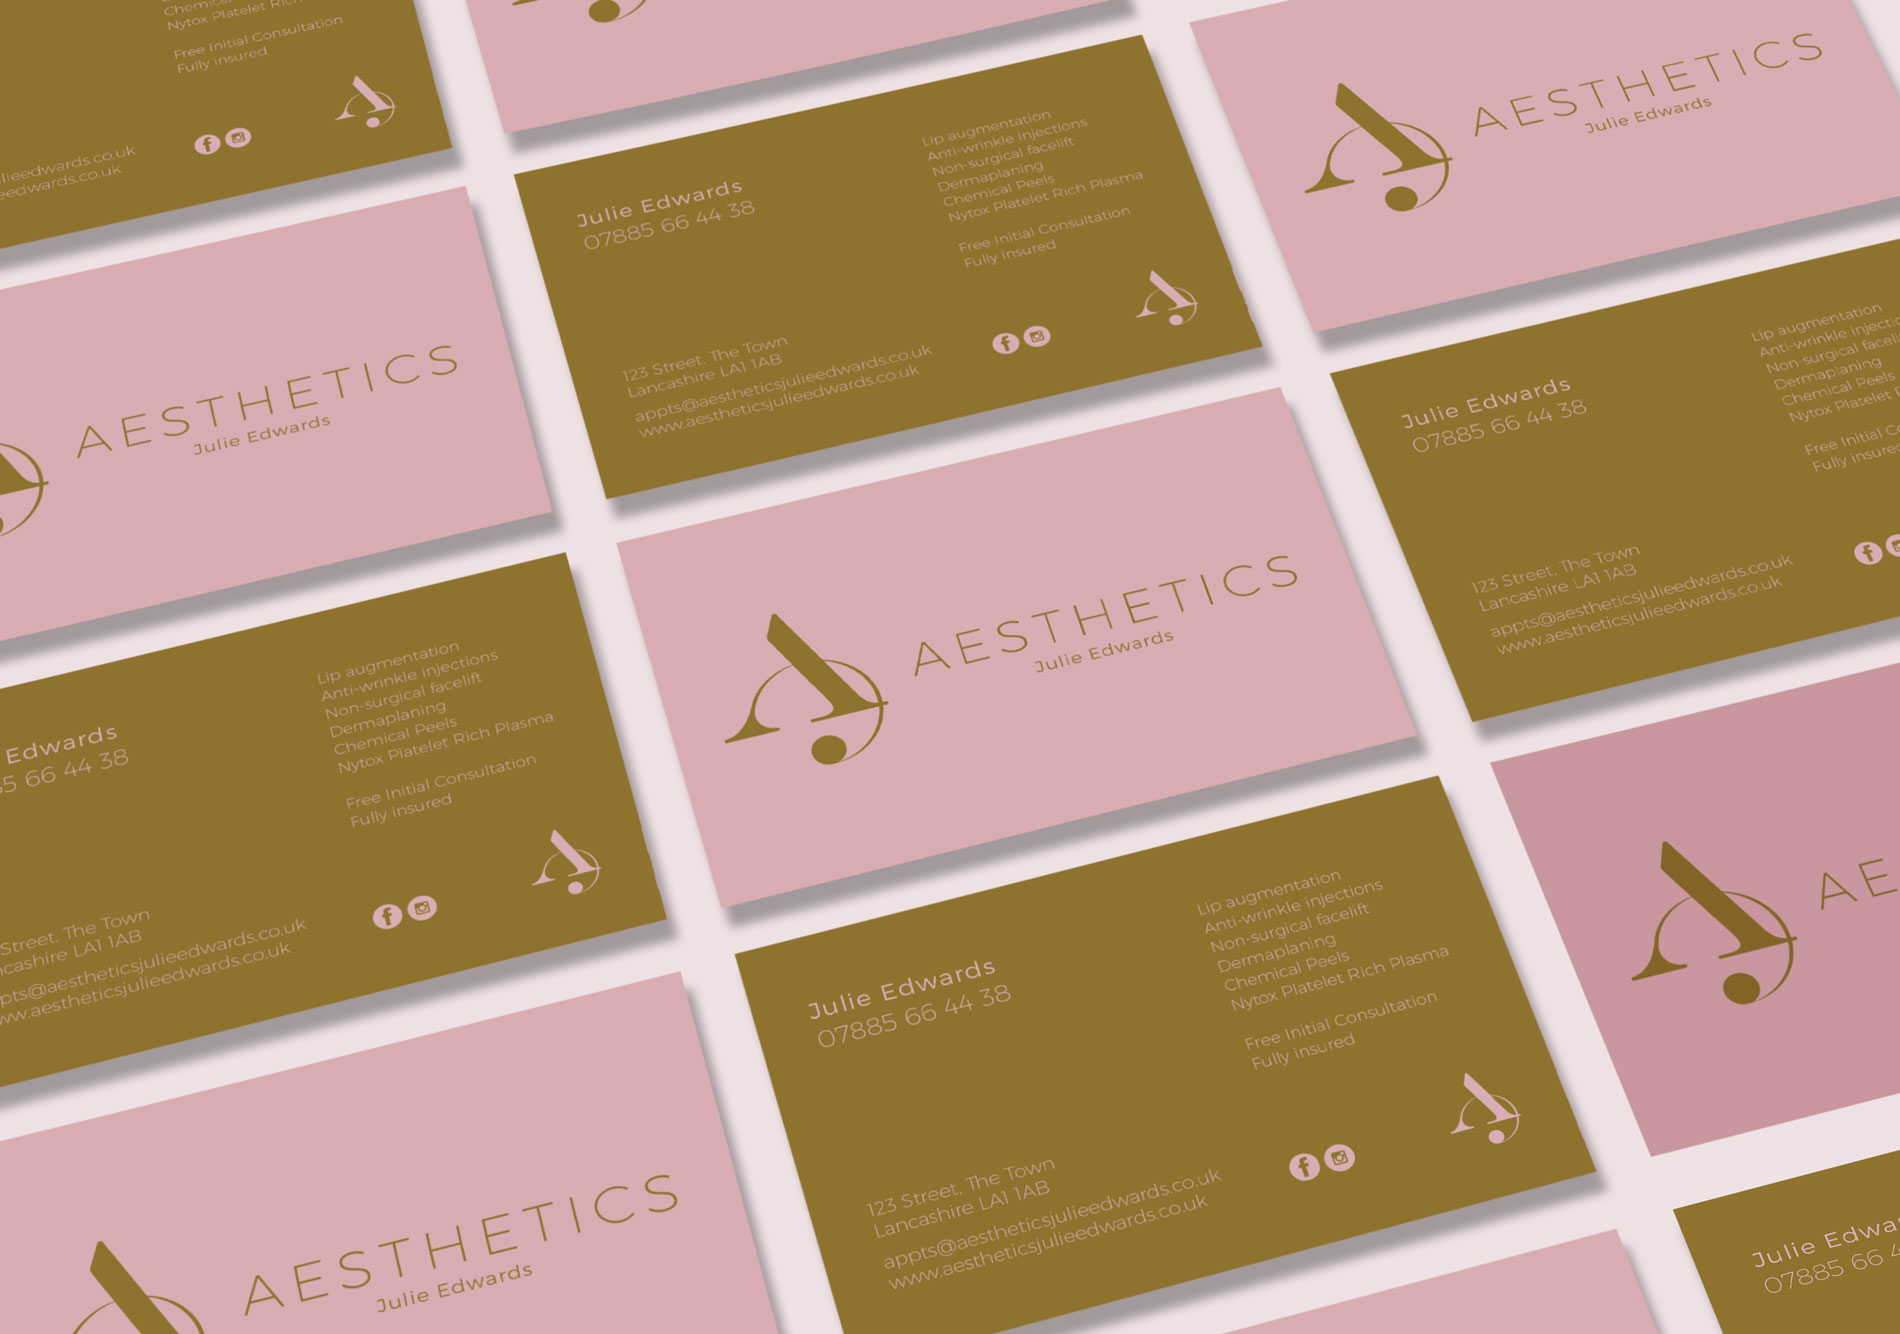 Aesthetics logo designs, logotype developments